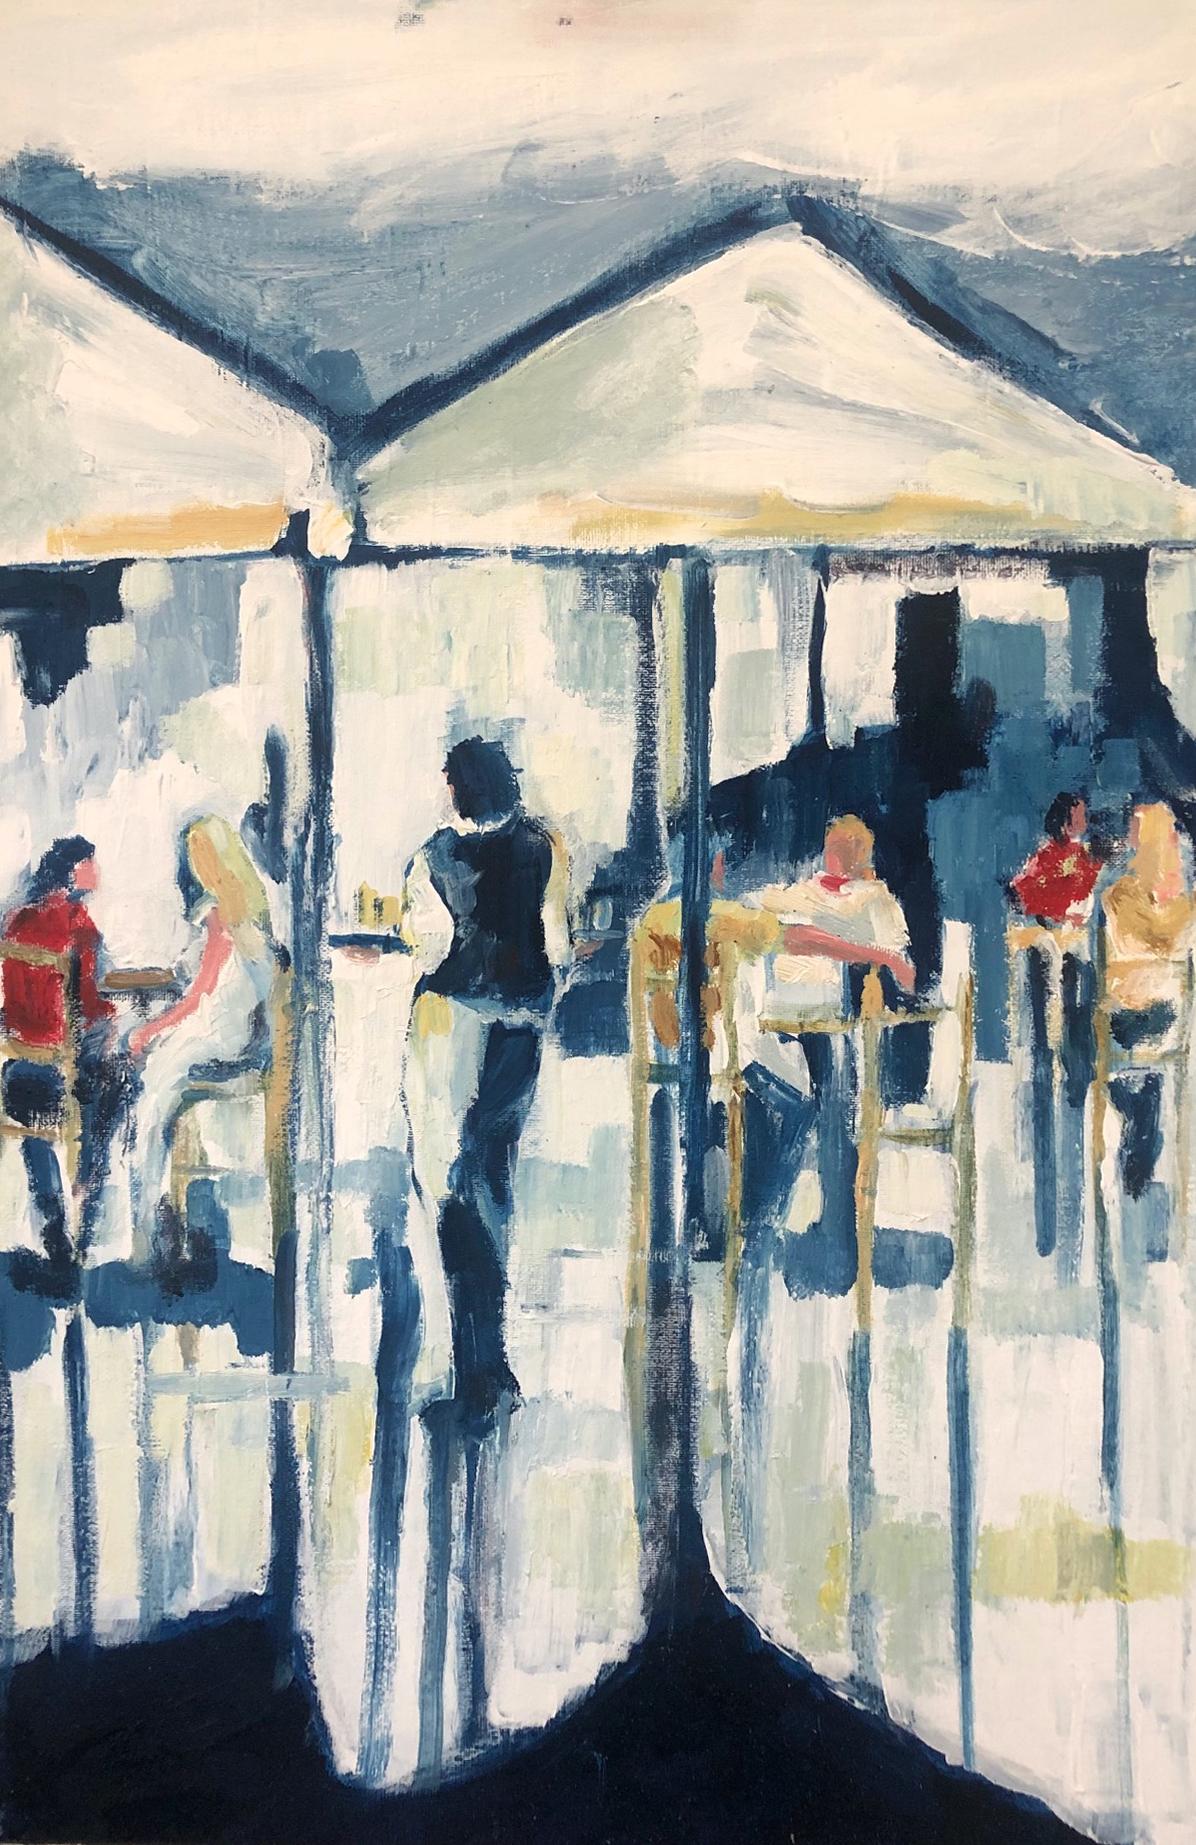 Waiter Cafe Society - impressionnisme original - paysage urbain figuratif peinture à l'huile - Art